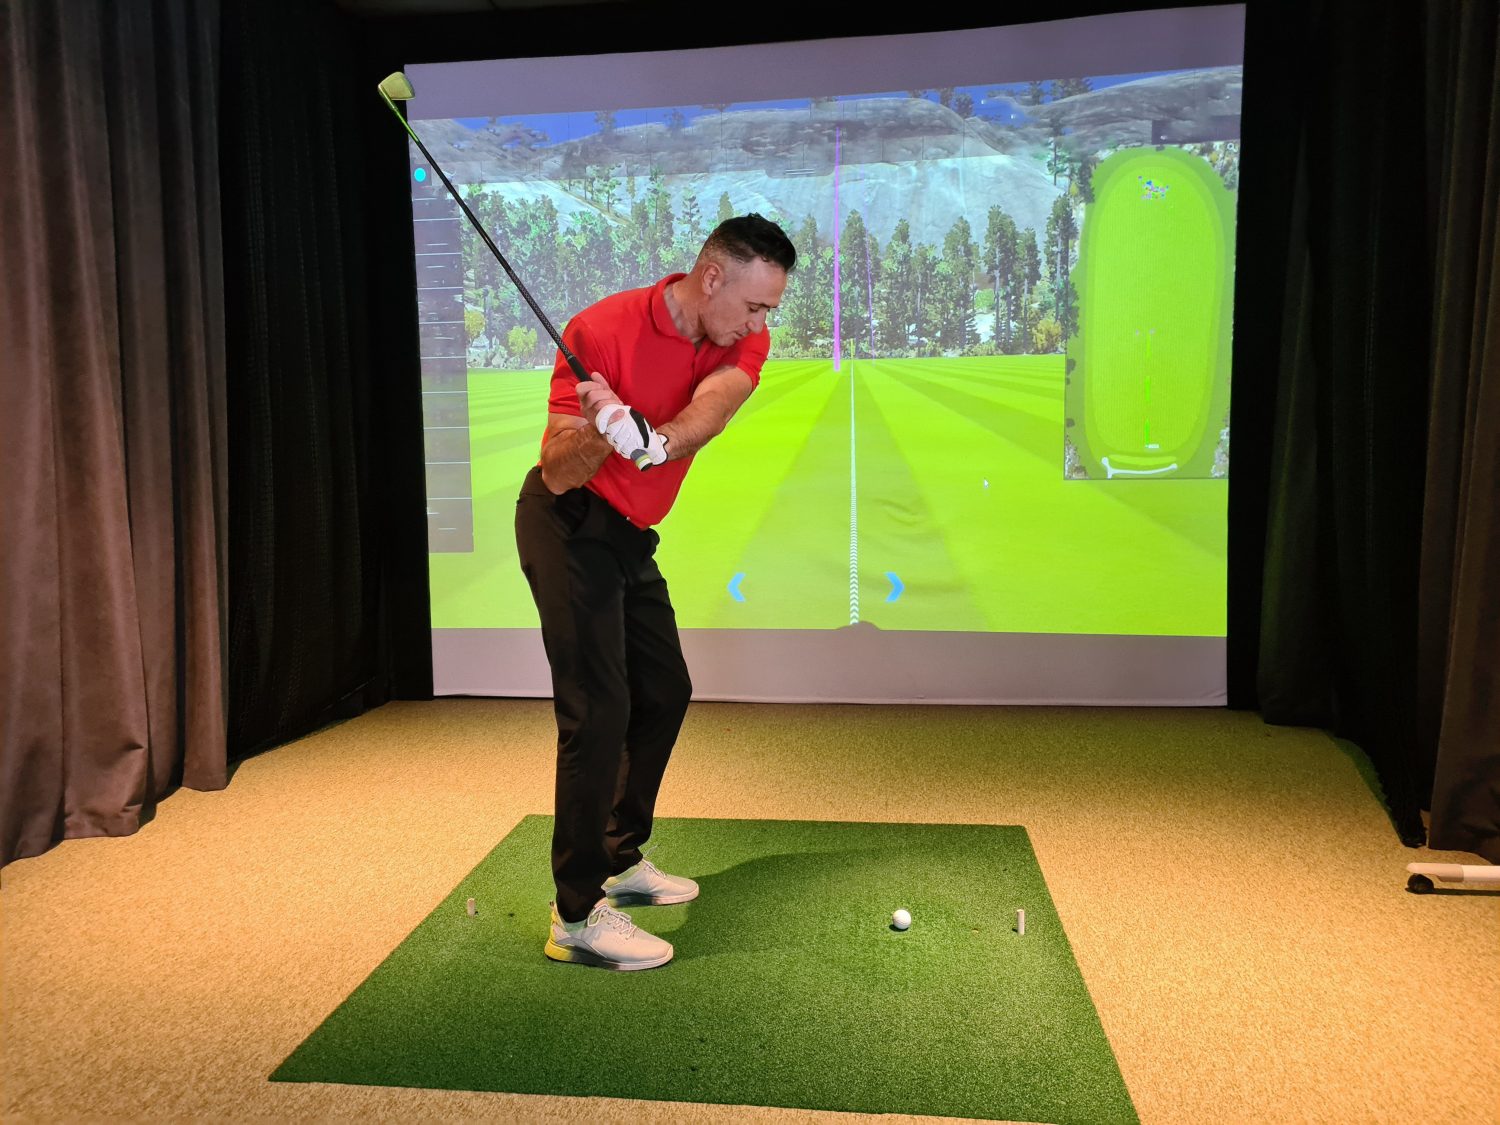 Professional male golfer holding club playing golf indoors on golf simulator